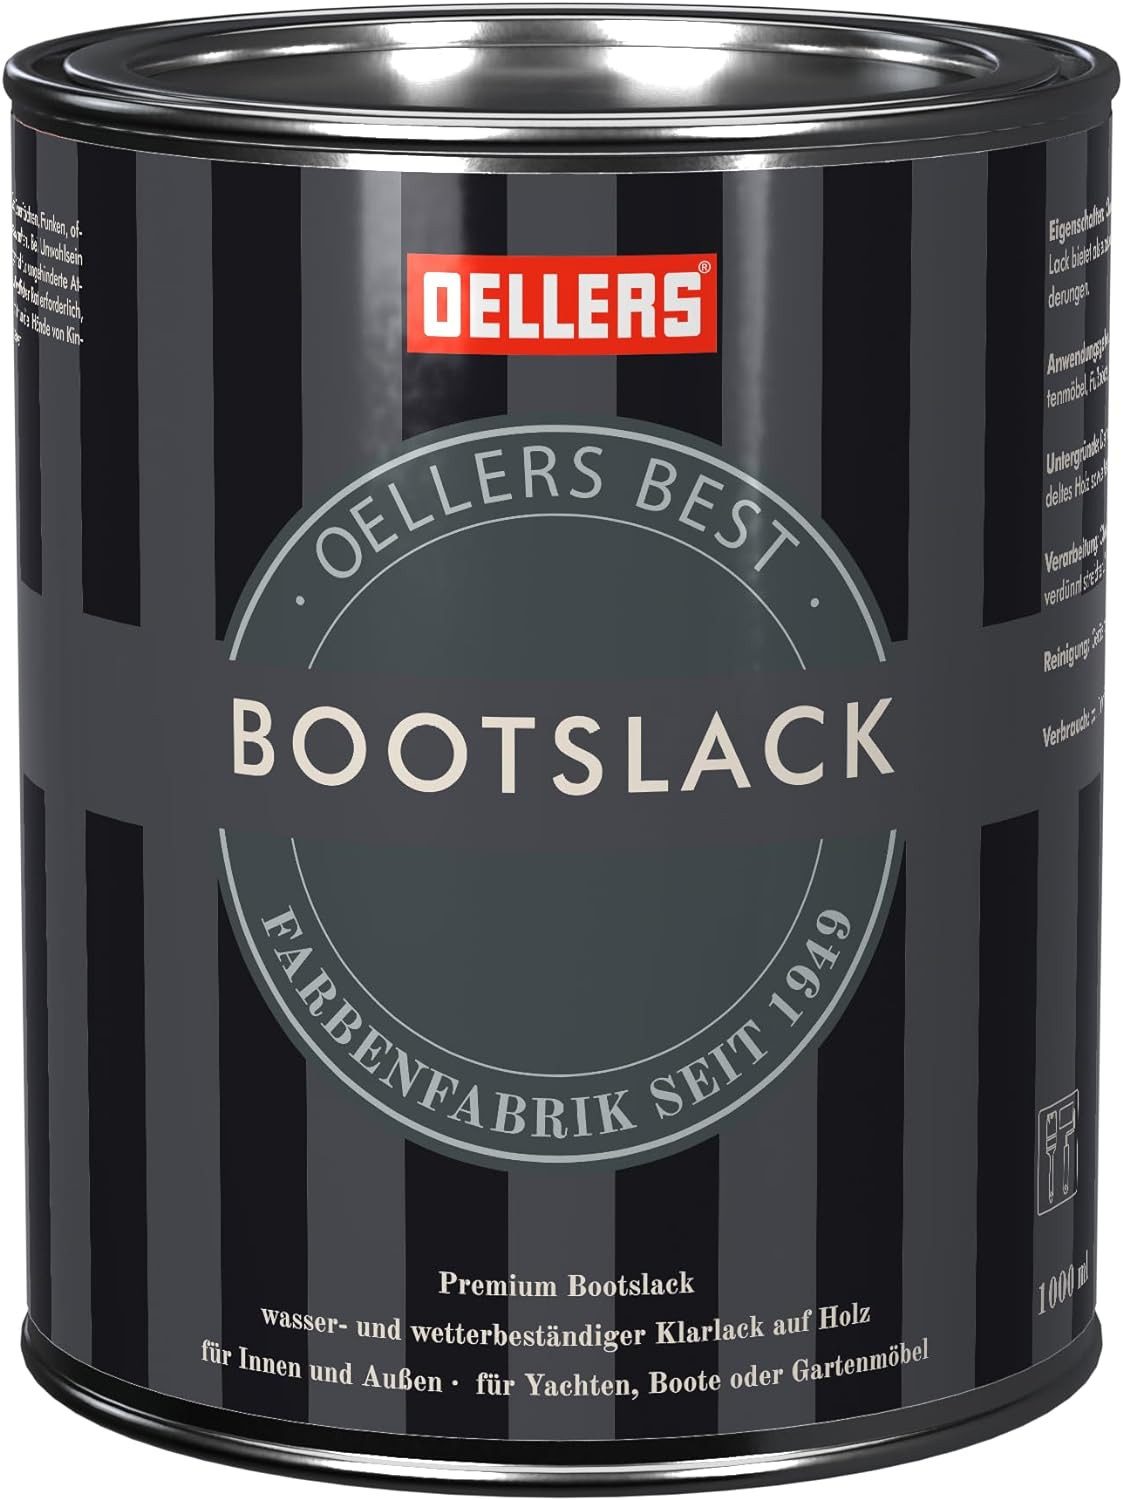 OELLERS Holzlack Premium, Bootslack 1 Liter, farblos, seidenglänzend, Möbellack, Holzlack